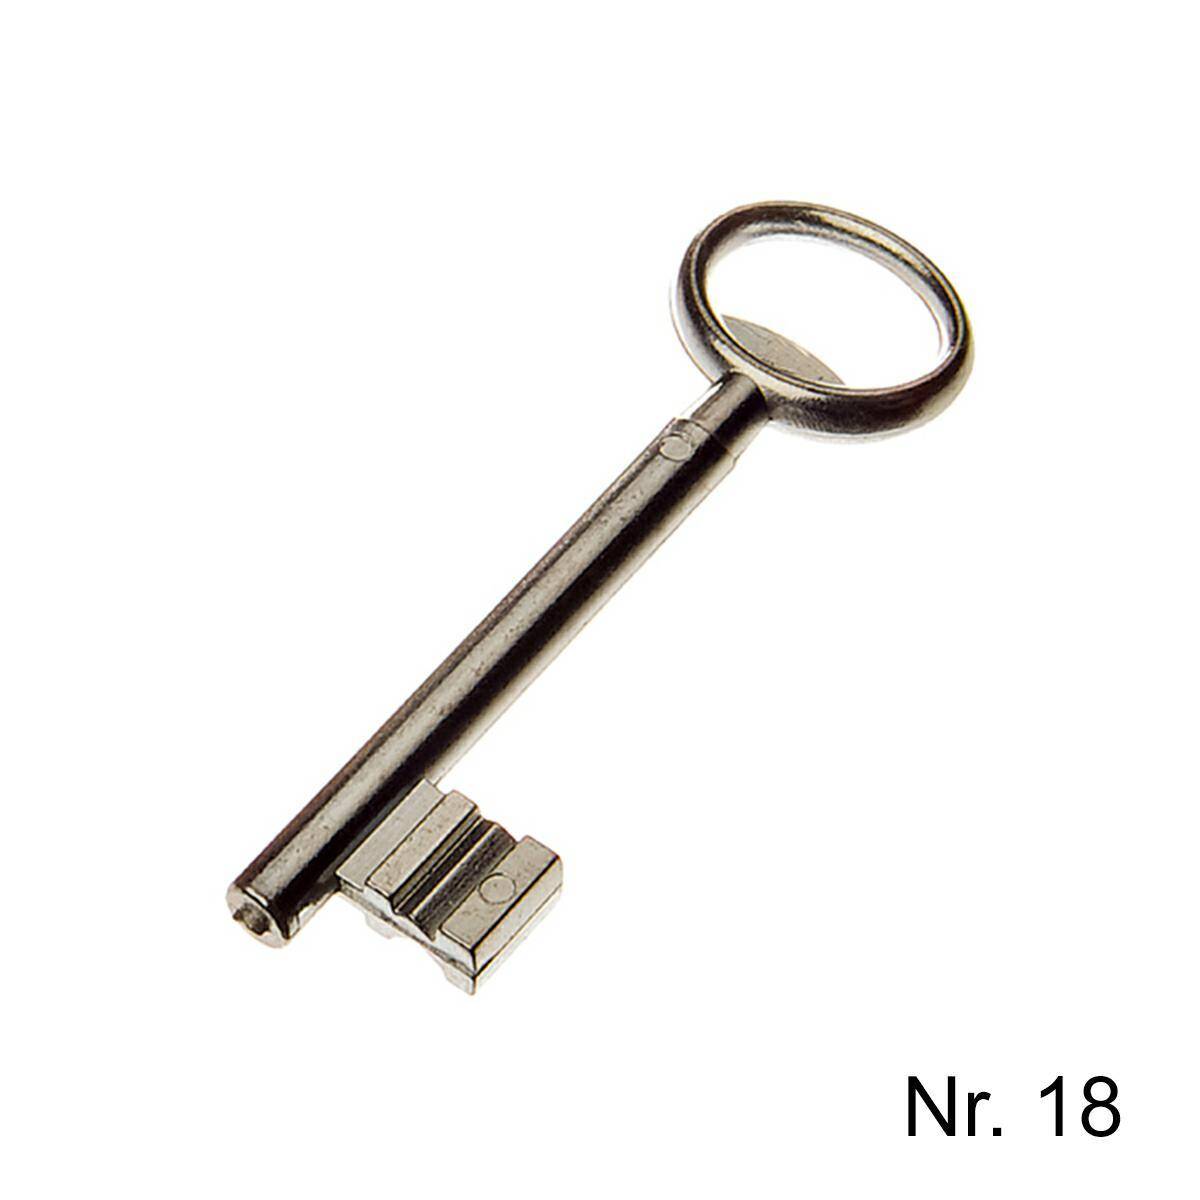 Cast key Jania for the lock - No. 18